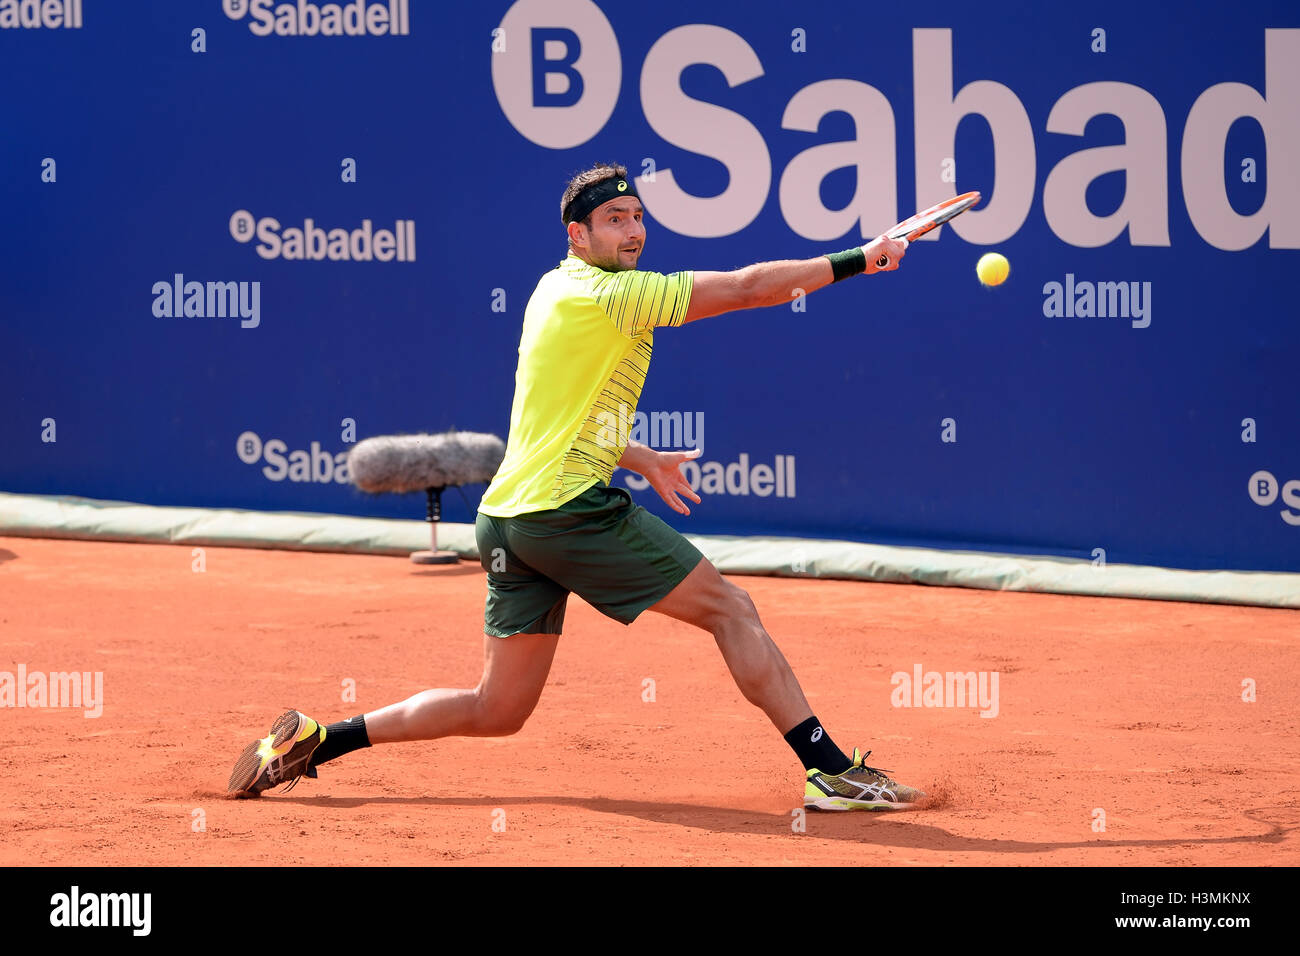 BARCELONA - Abr 20: Marinko Matosevic (Jugador de tenis de Australia) desempeña en la ATP Barcelona Open. Foto de stock